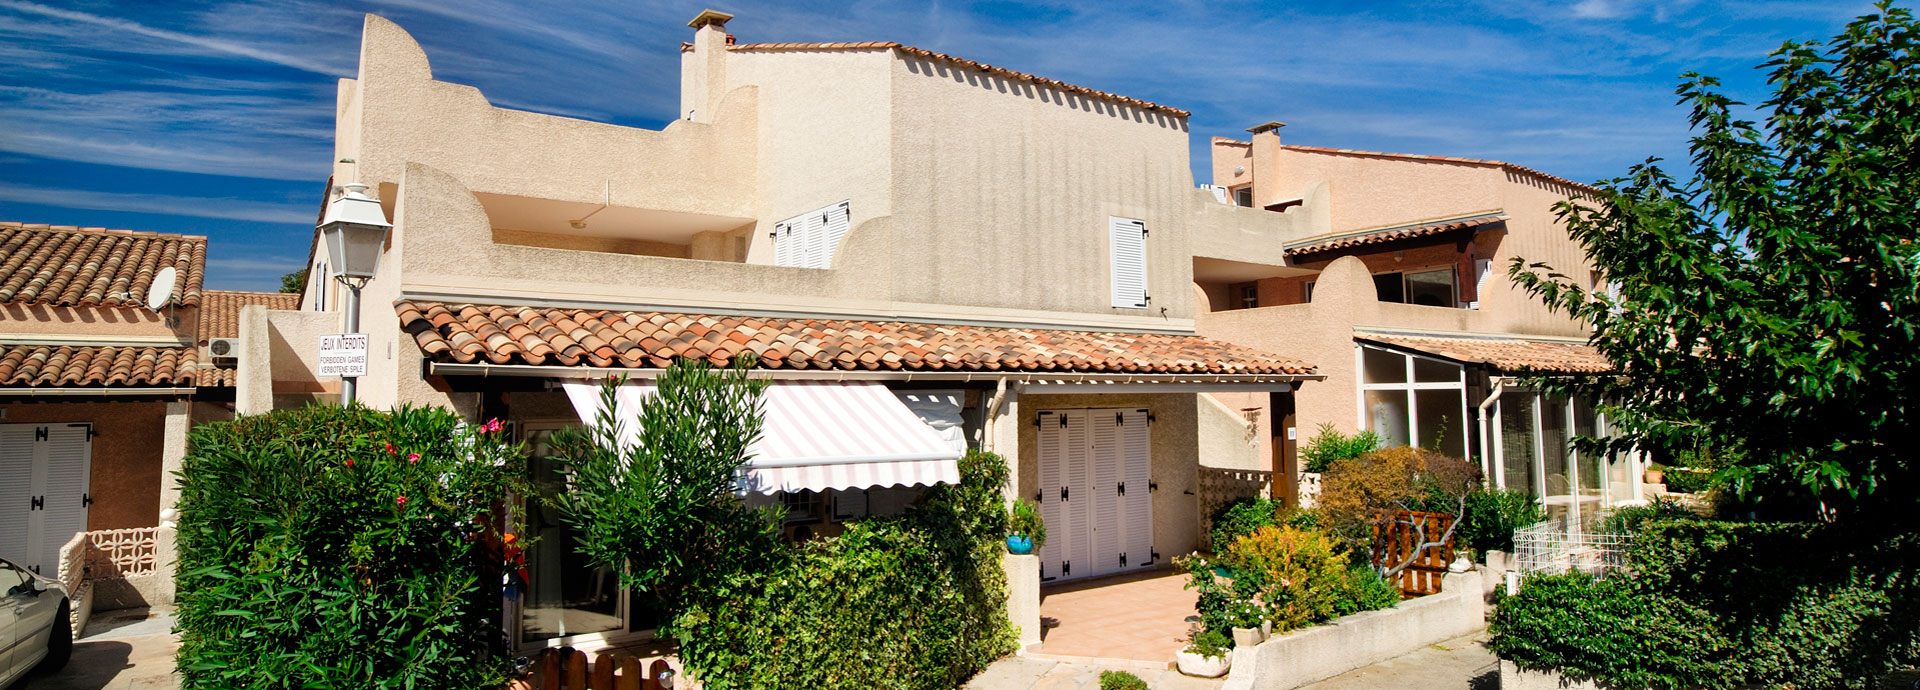 Holiday rental at Cap d'Agde : Samaria Village residence